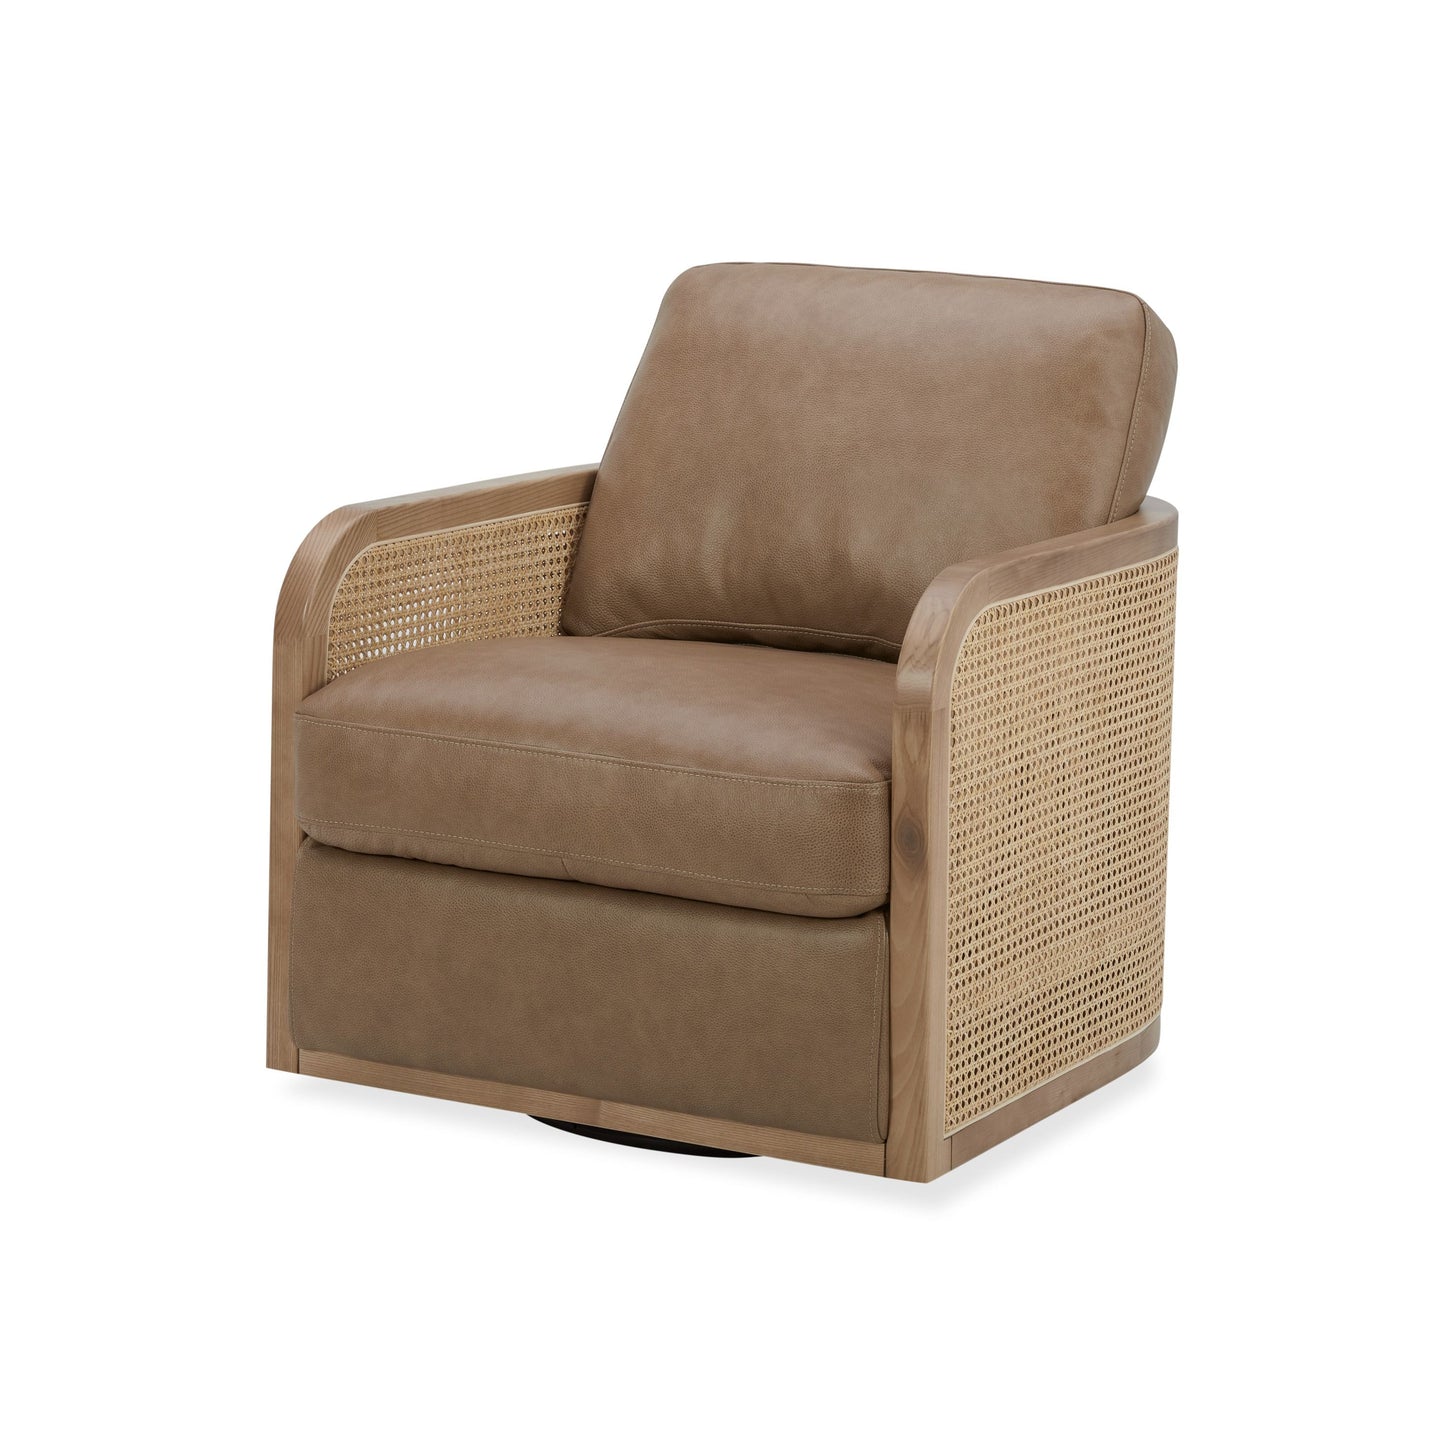 Divani Casa Danson - Modern Tan Leather + Wicker Swivel Accent Chair